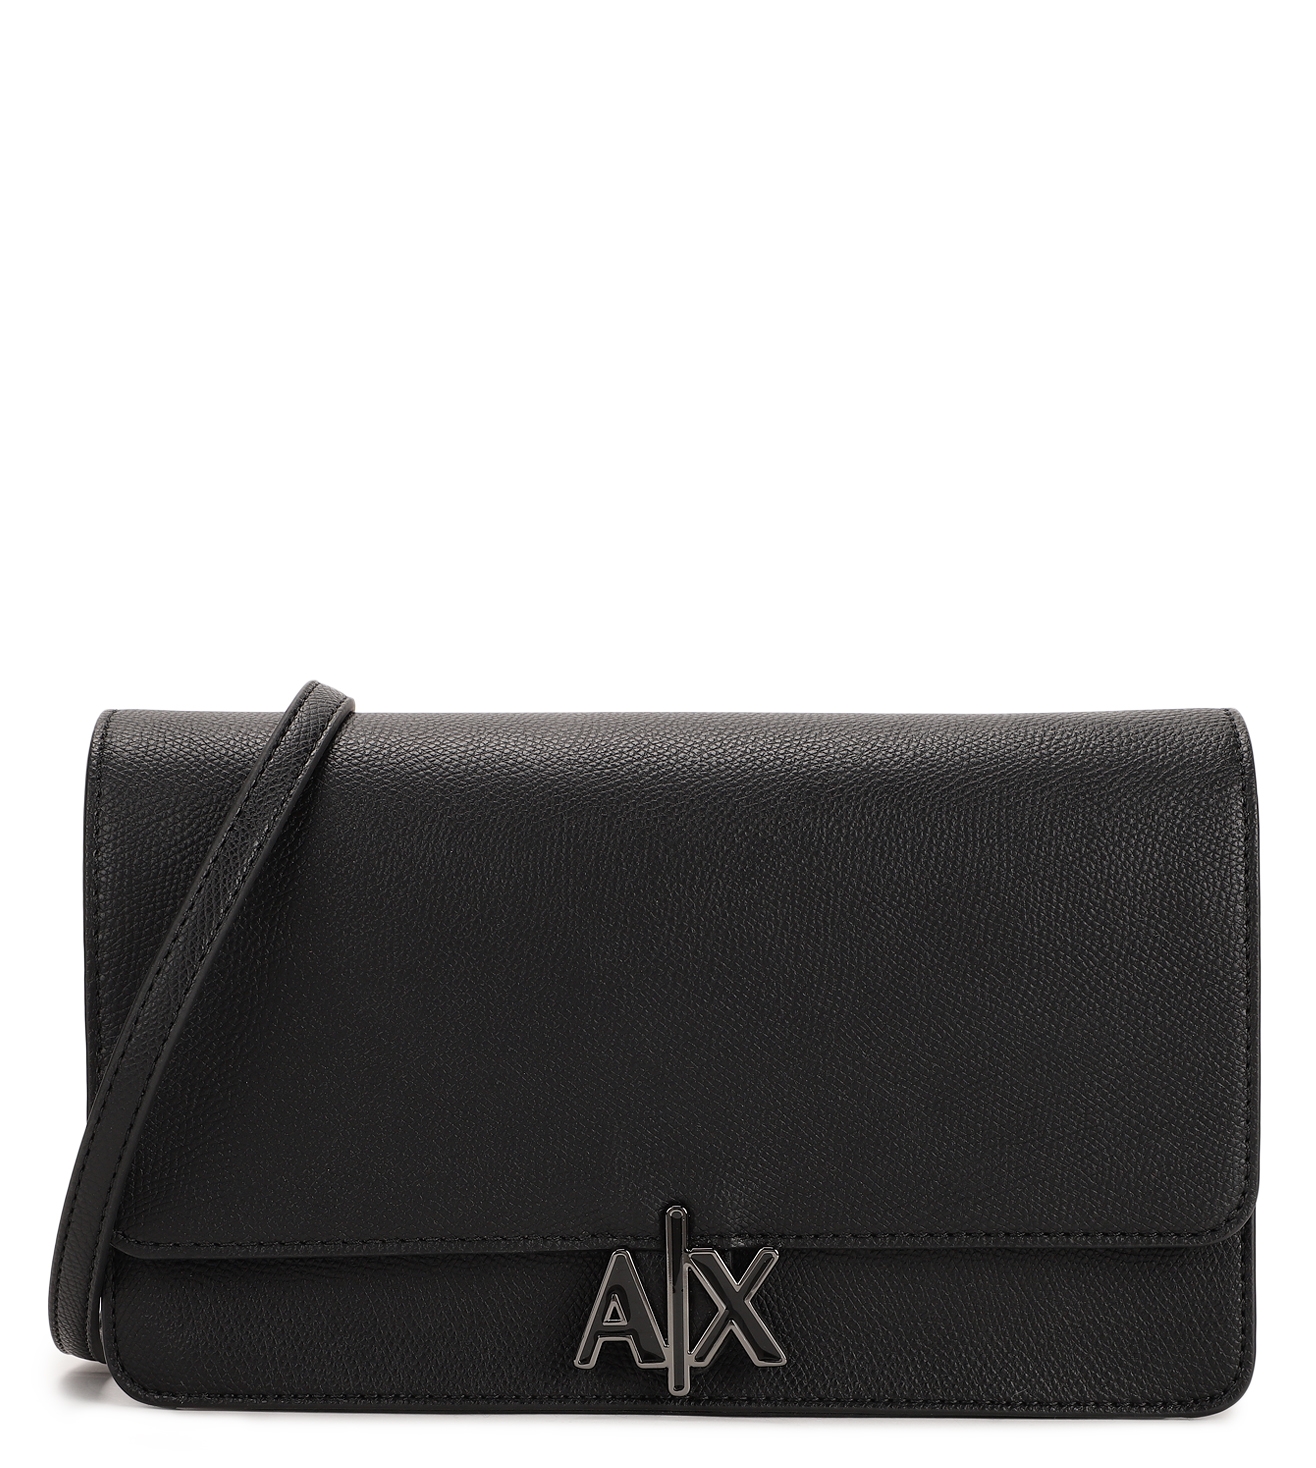 AX Armani Exchange women's fashion black flap handbag Satchel bag purse |  eBay